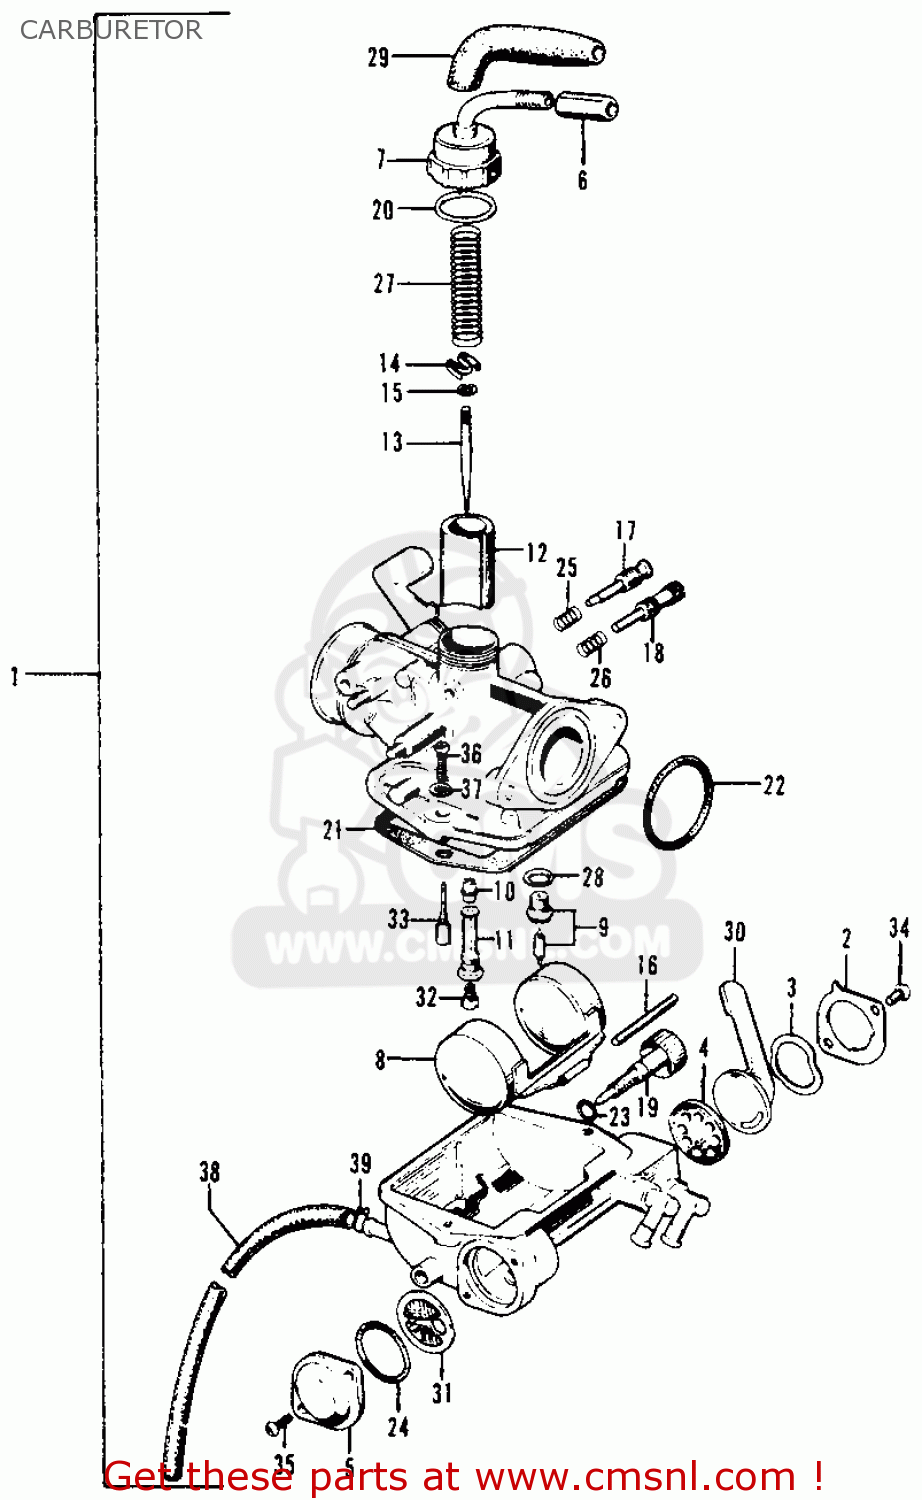 Honda 70 carburetor adjustment pdf